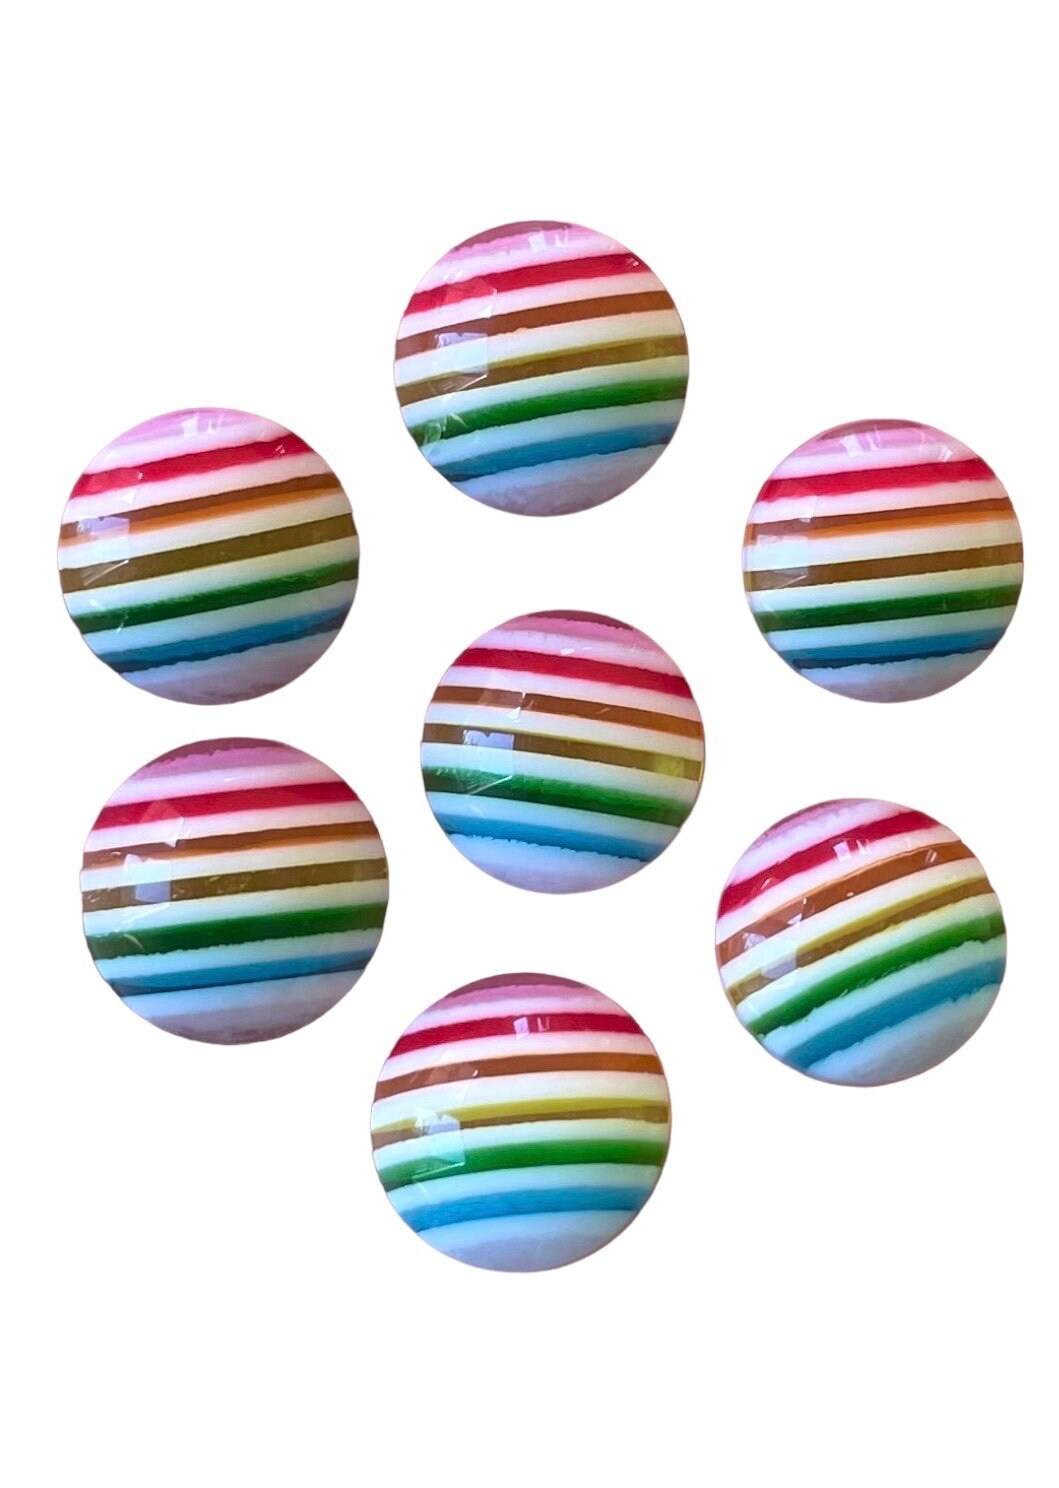 Round pastel rainbow striped cabochons, 12mm